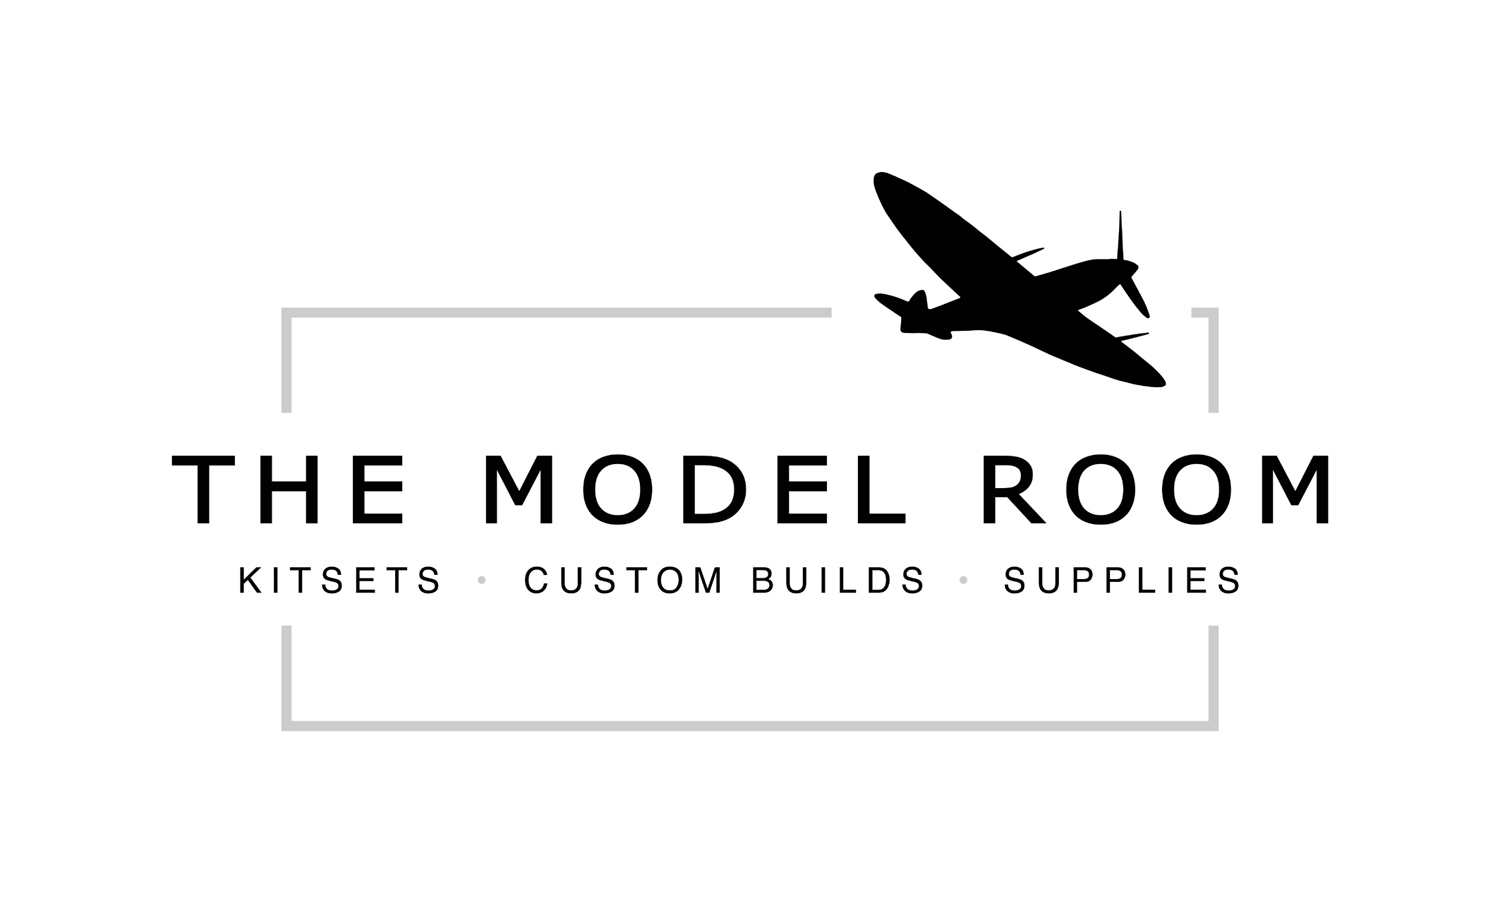 The Model Room